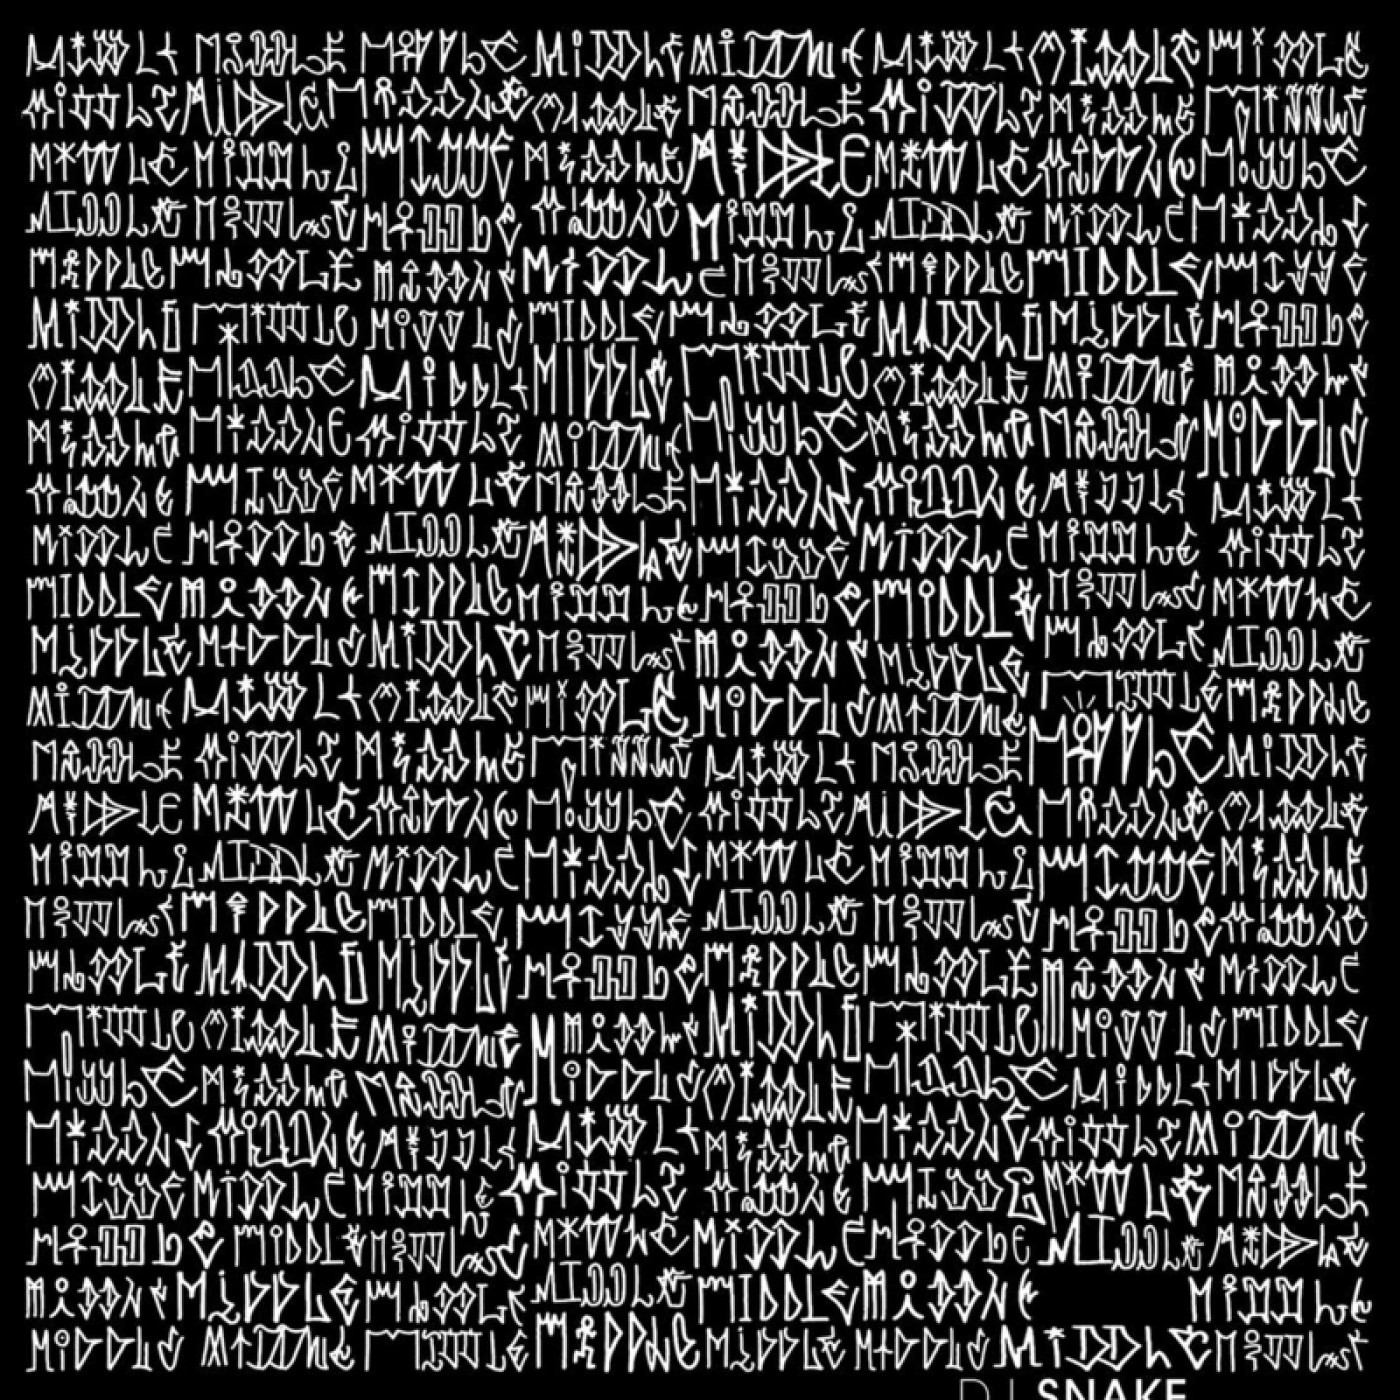 Albums 97+ Wallpaper Dj Snake Middle Mija Remix Latest